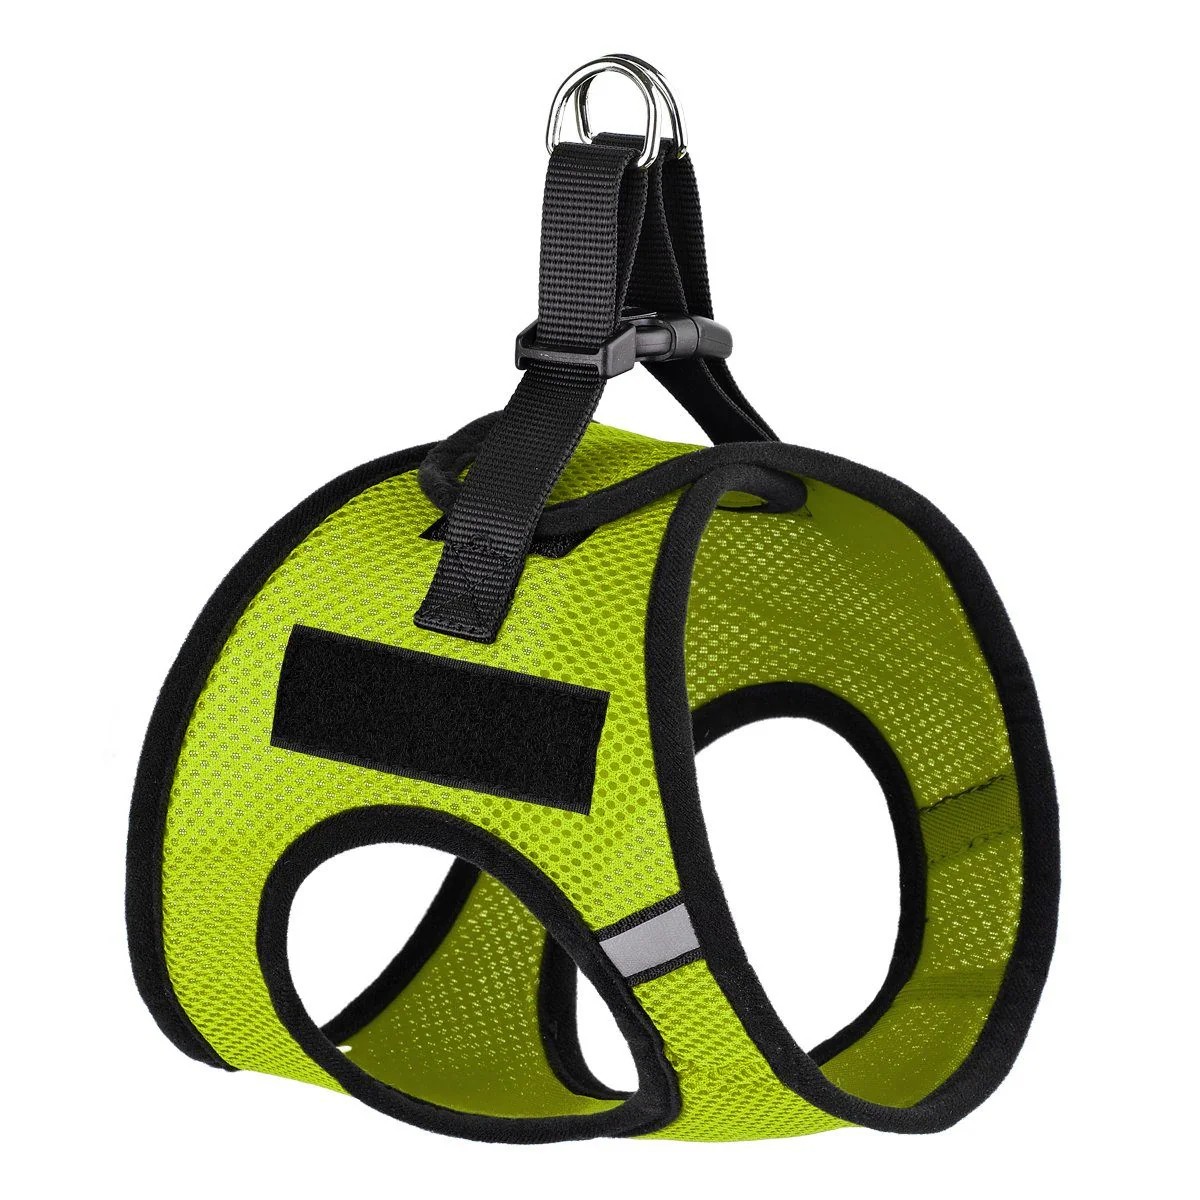 York Mesh Dog Harness + Built-in Hook & Loop Fastener - Green